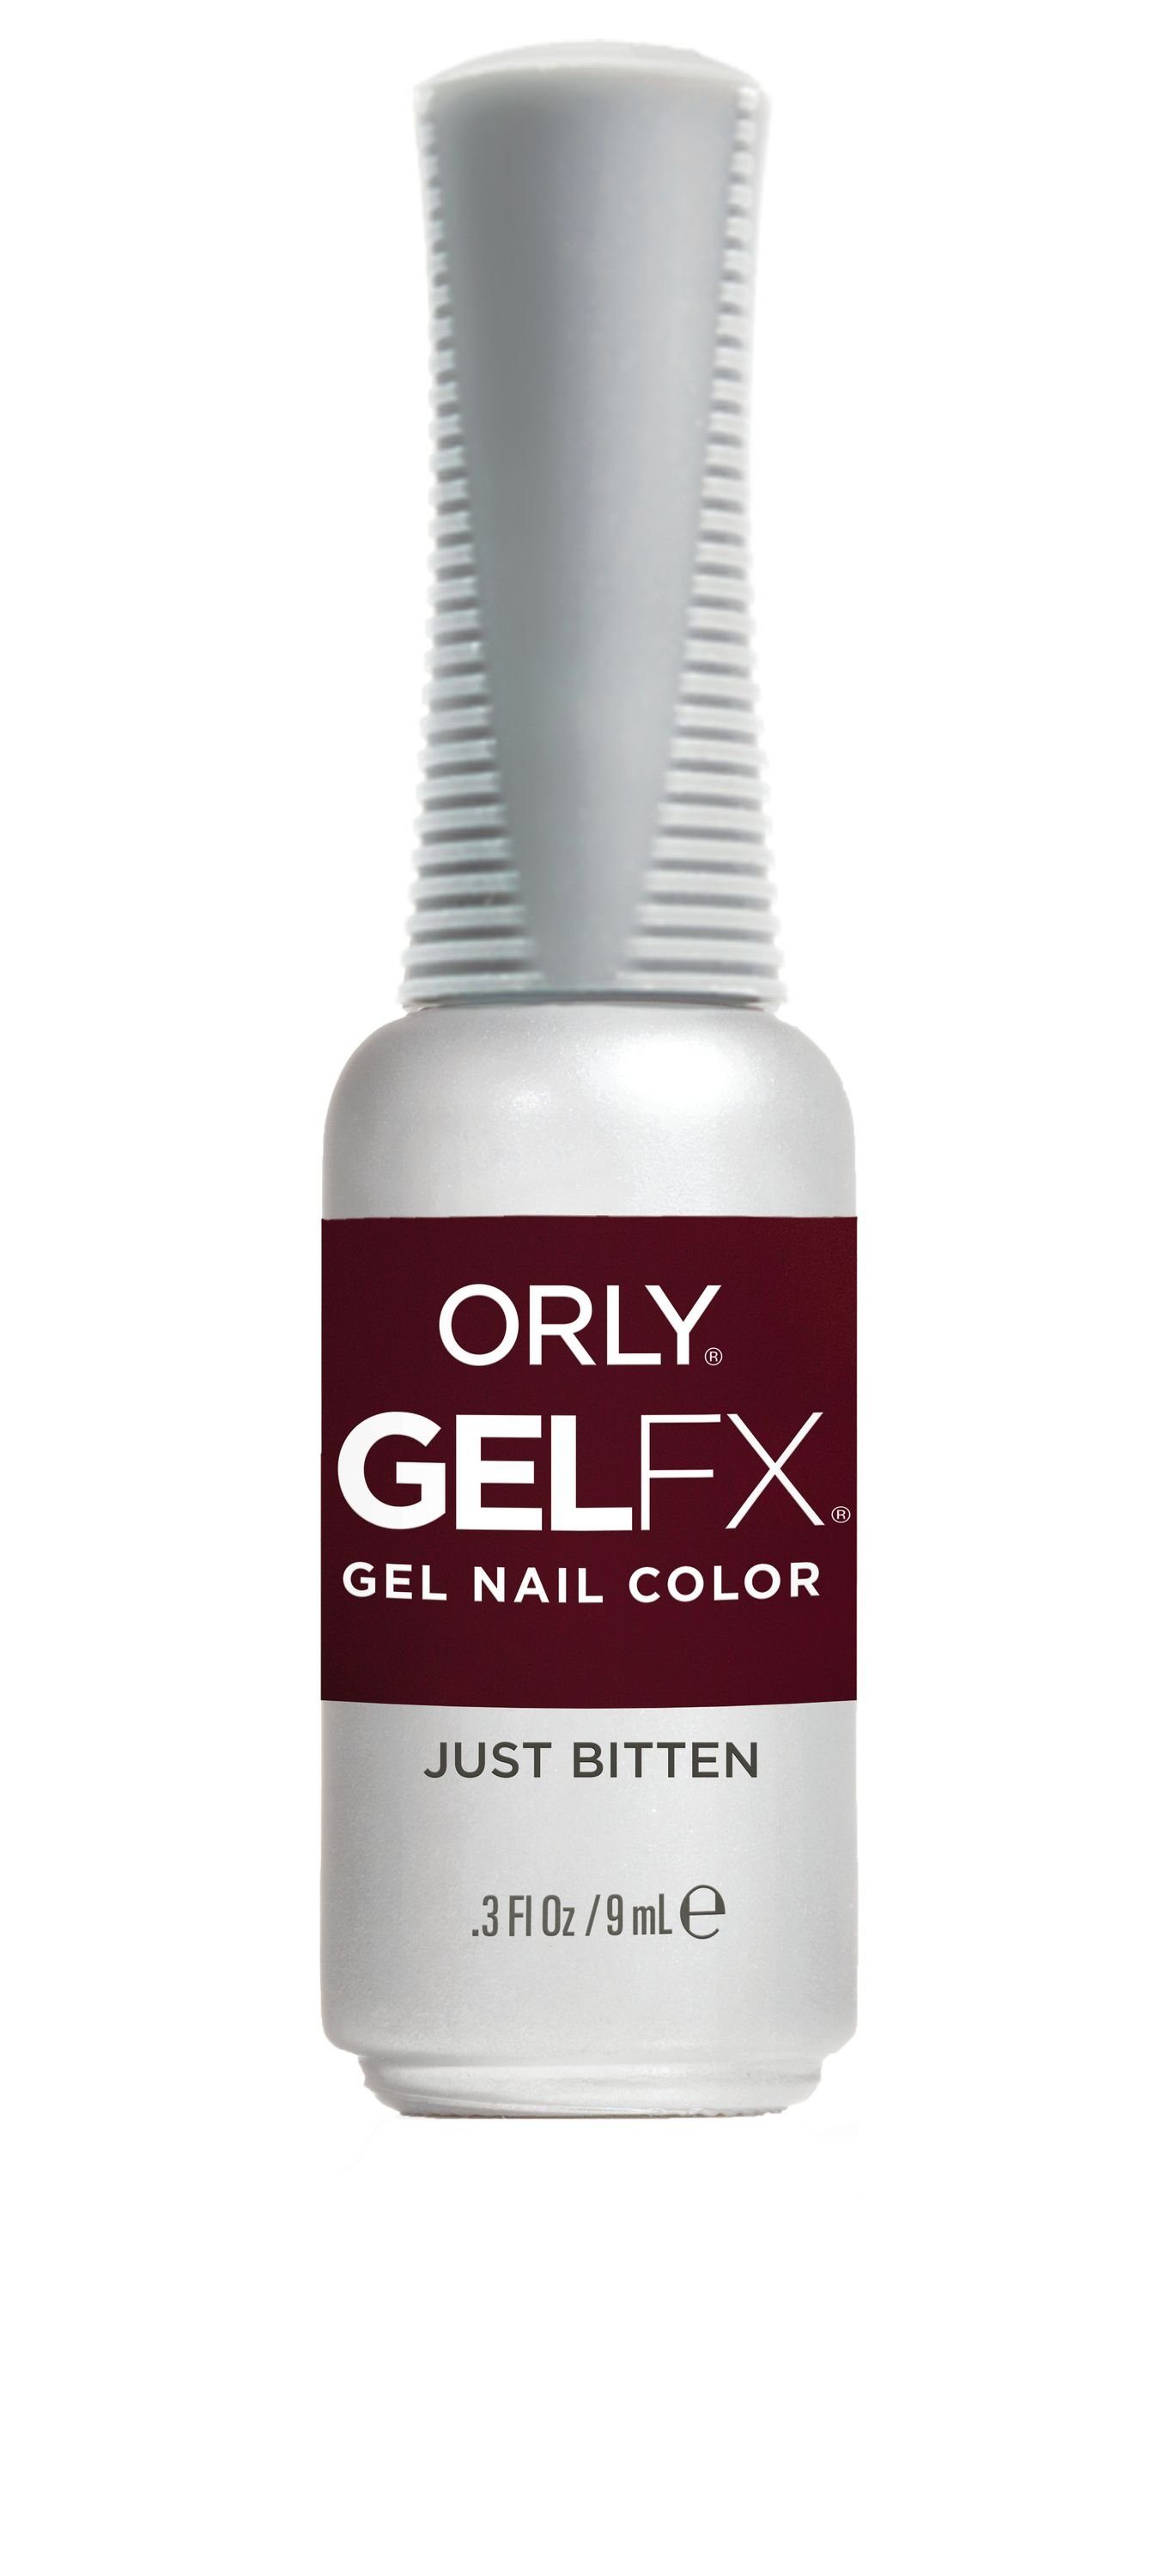 ORLY UV-Nagellack GEL FX Just Bitten, 9ML | Nagellacke